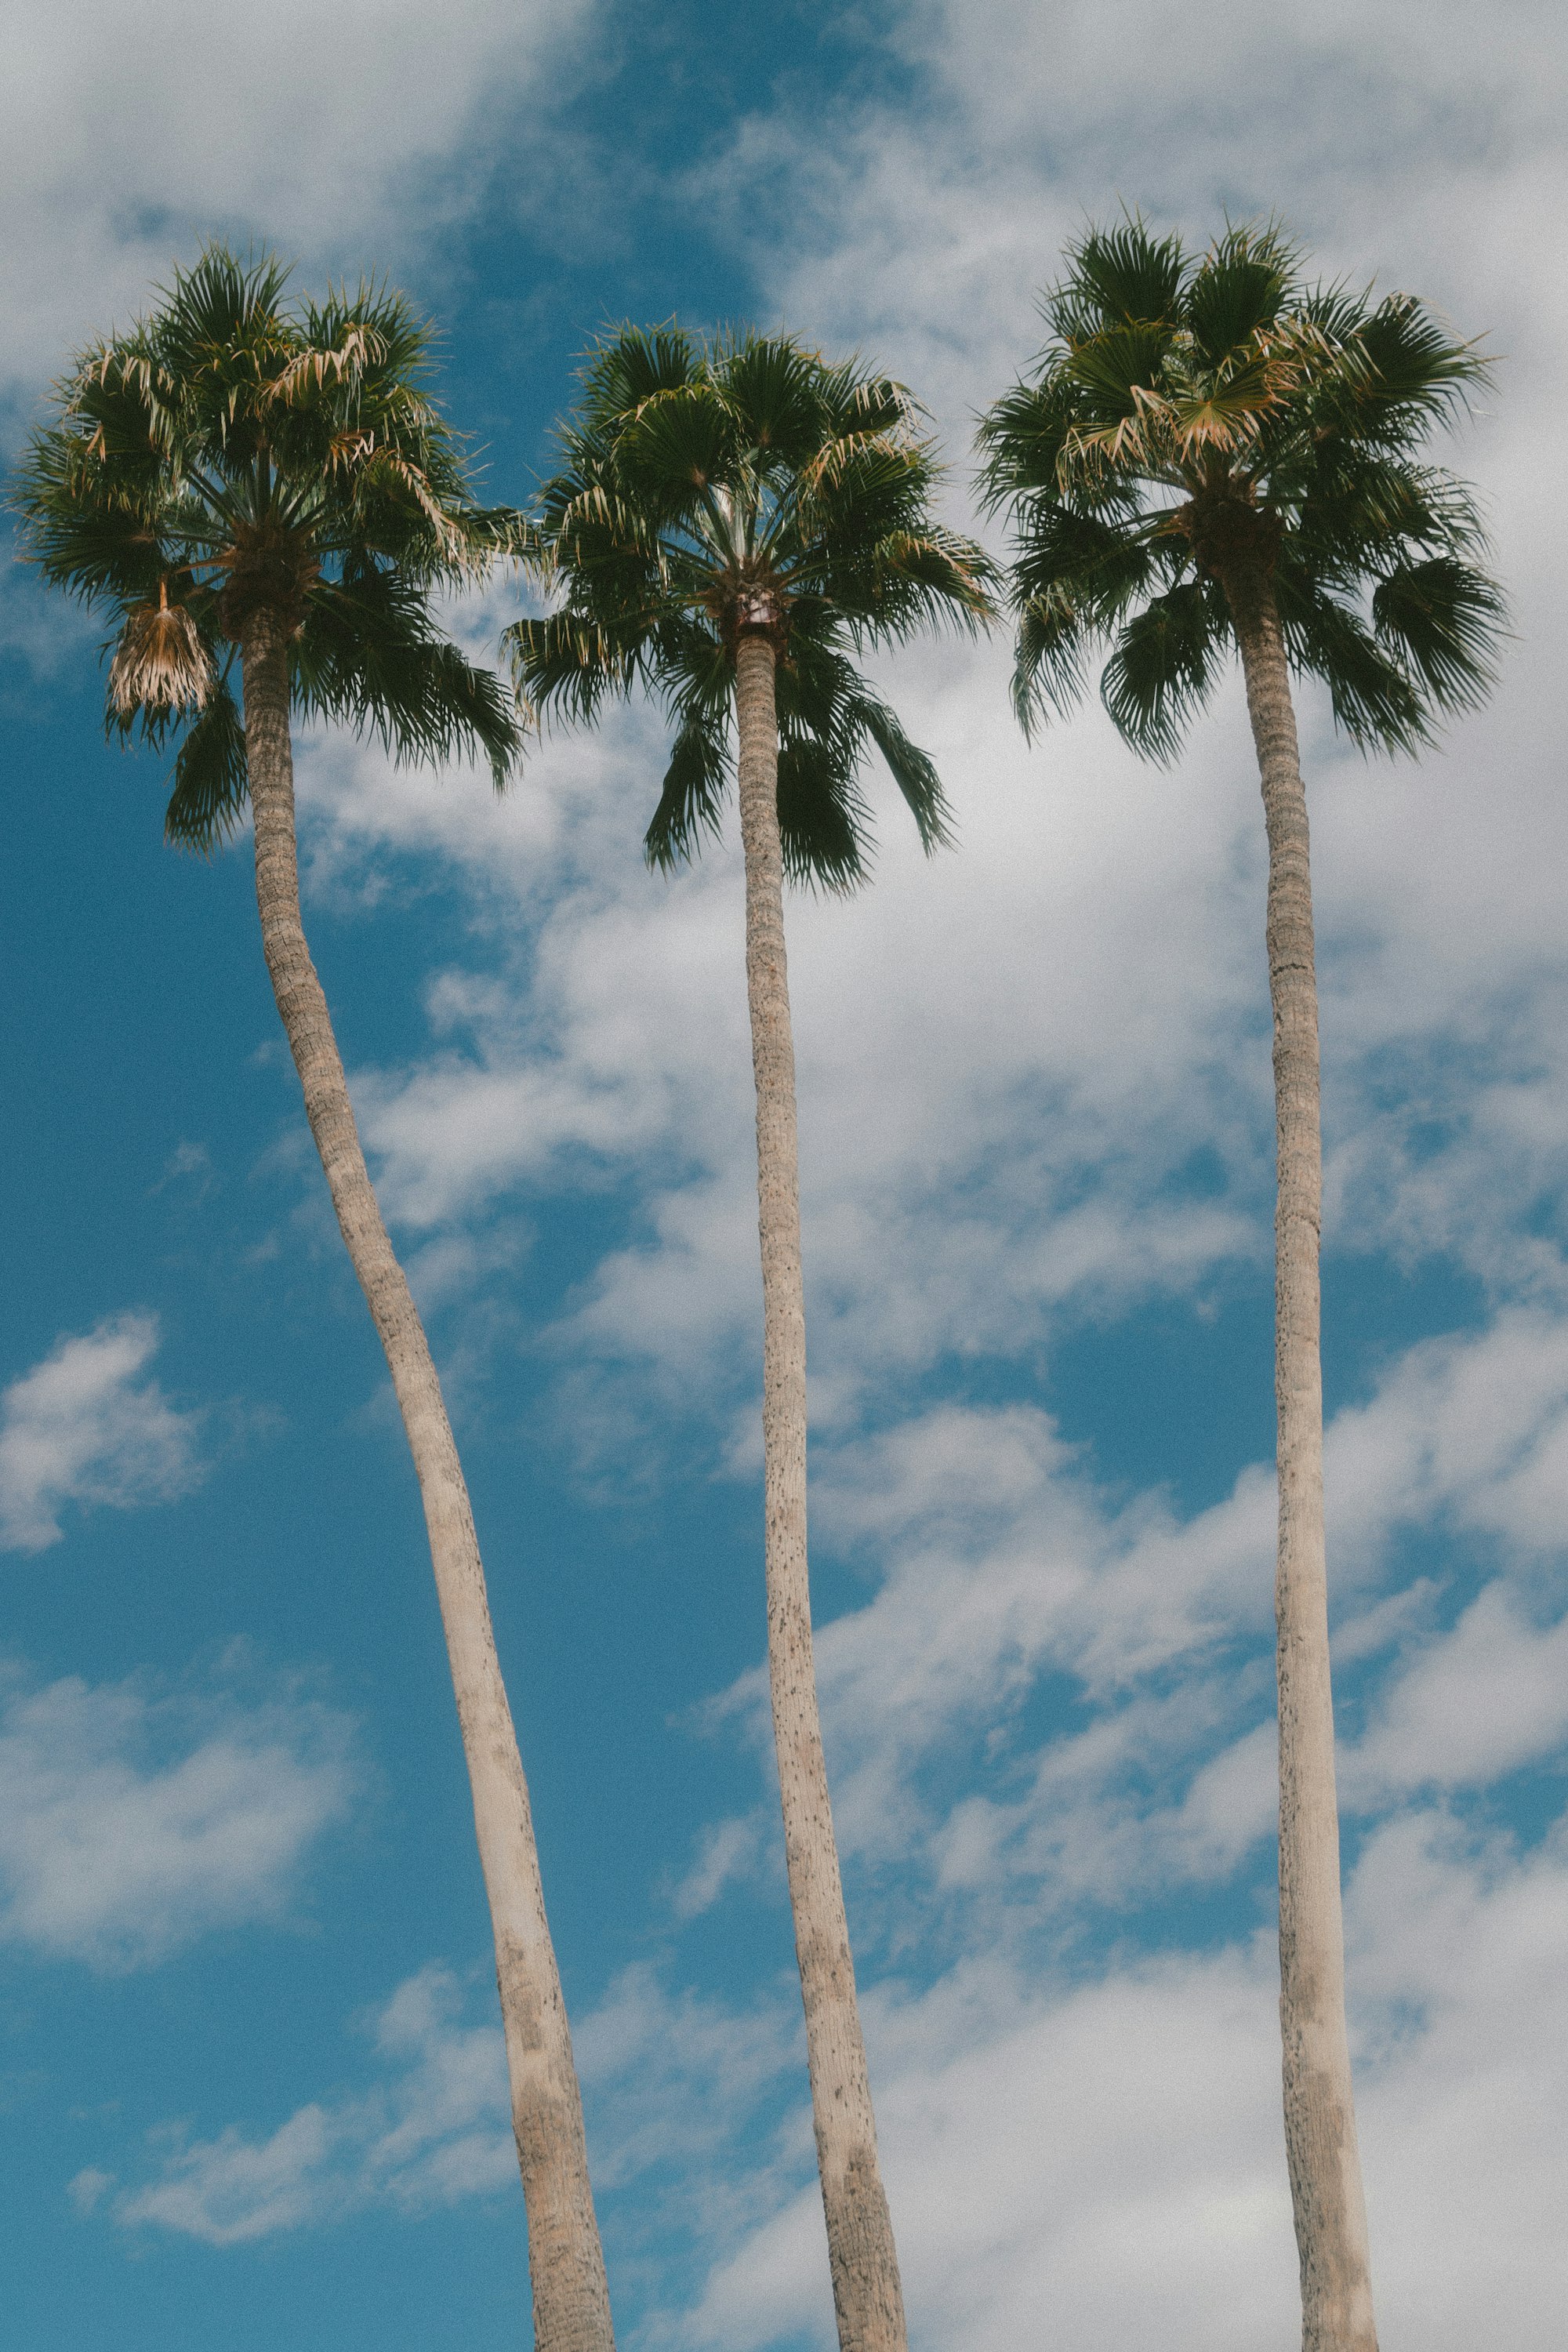 Three tall palm trees against a blue sky, symbolising the three pillars of GYNTKT.